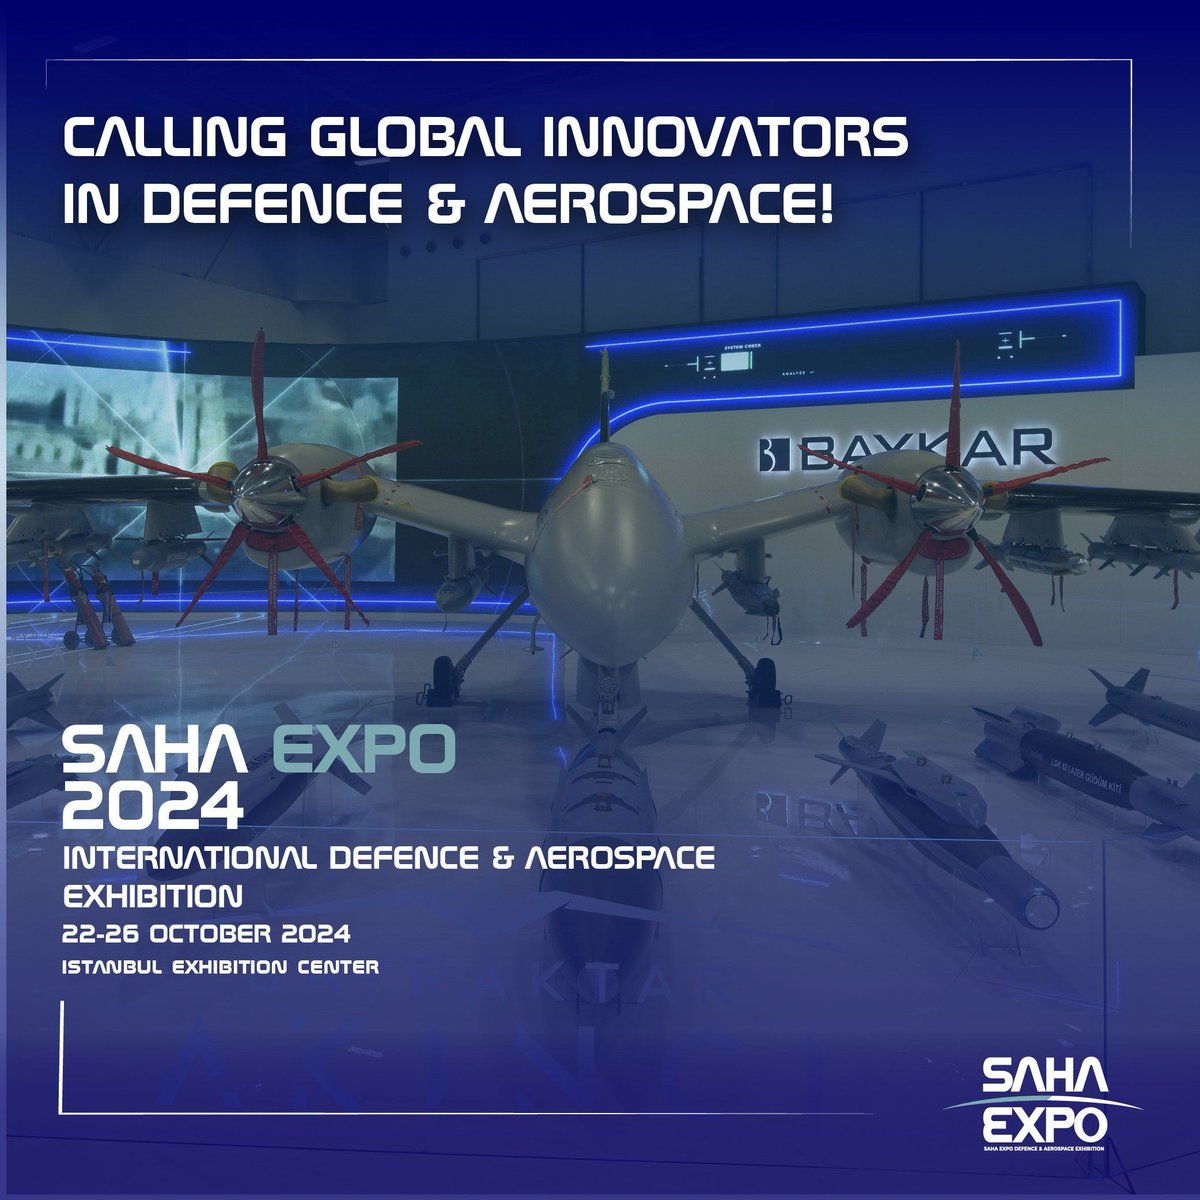 📢 Calling global innovators in Defence & Aerospace!

🤝 Be part of #SAHAEXPO2024 , Unlock innovation!

🔗 Register now!
buff.ly/49NqaO6

#GlobalInnovation #DefenceAerospace